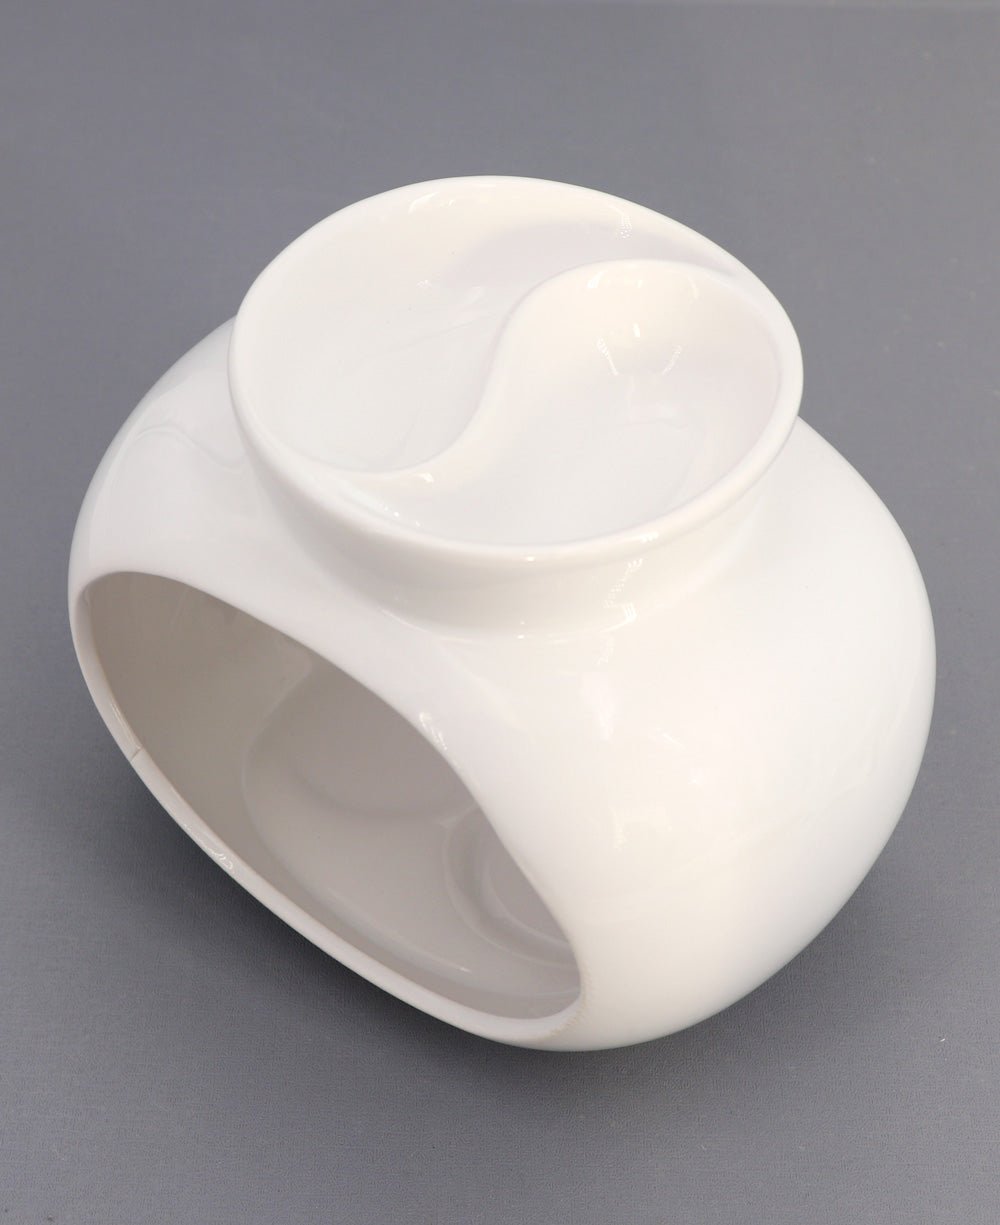 Yin Yang Design Ceramic Oil or Wax Melt Burner - Incense Holders